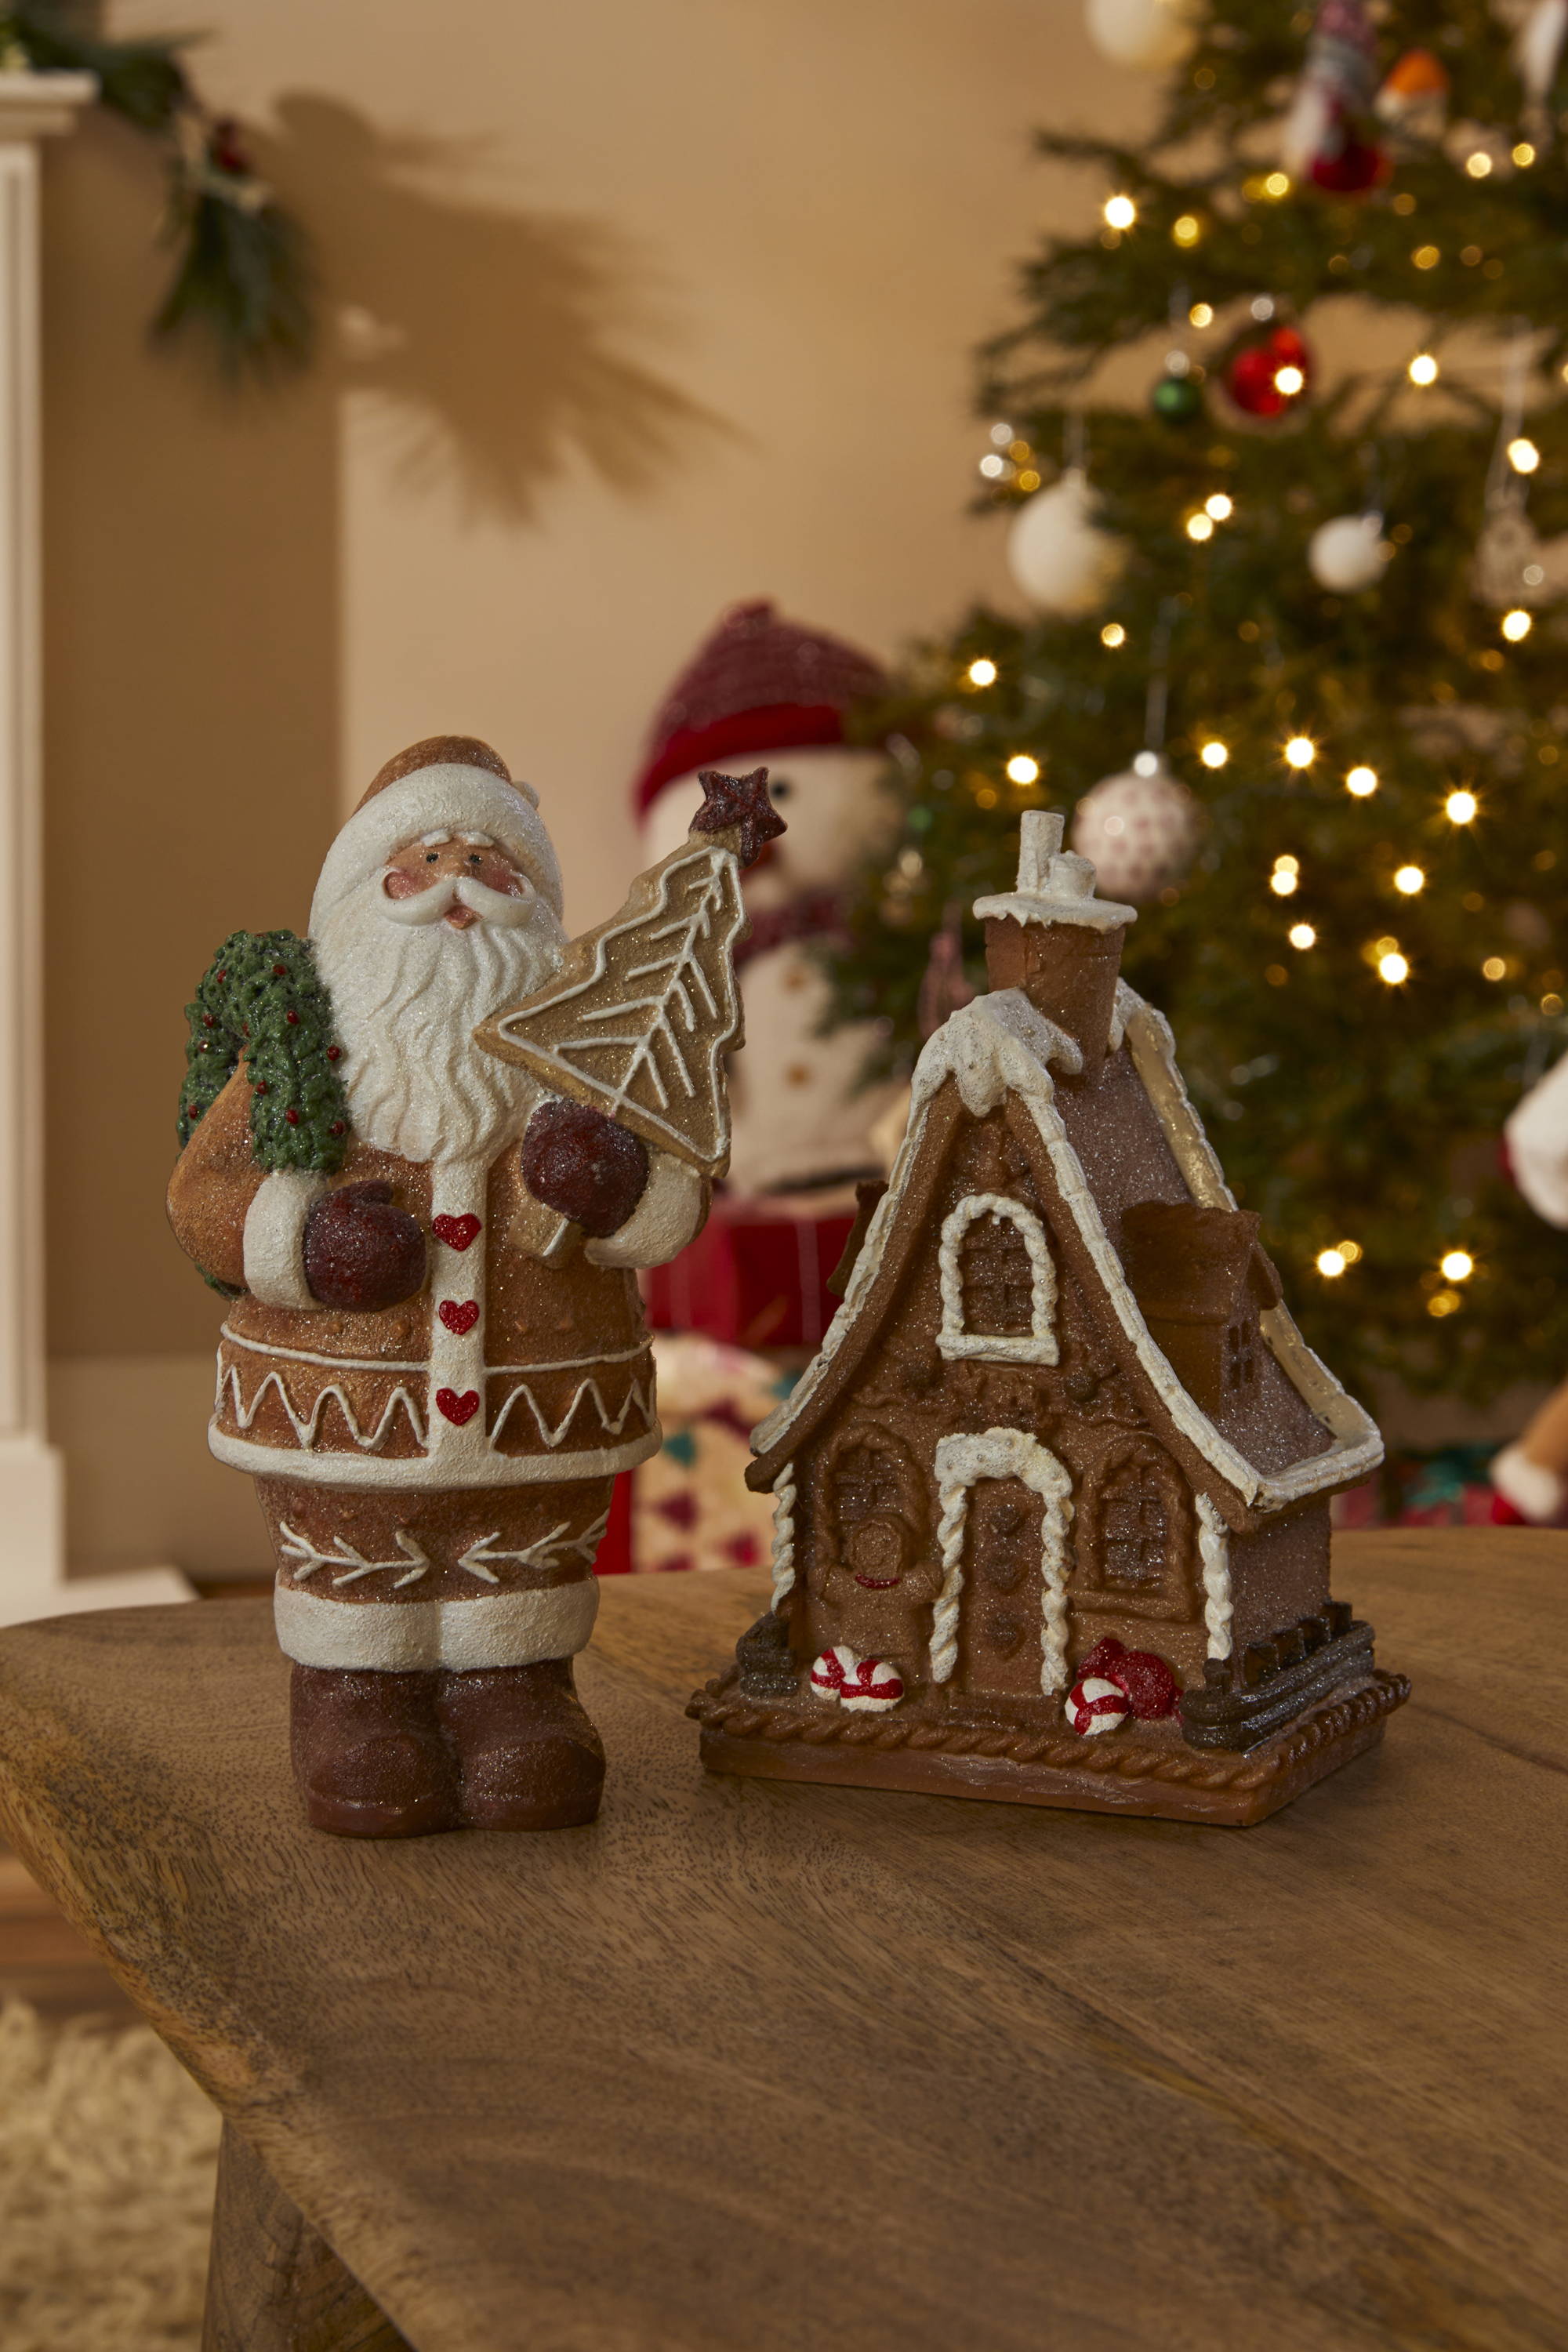 Gingerbread Santa & house Christmas ornaments